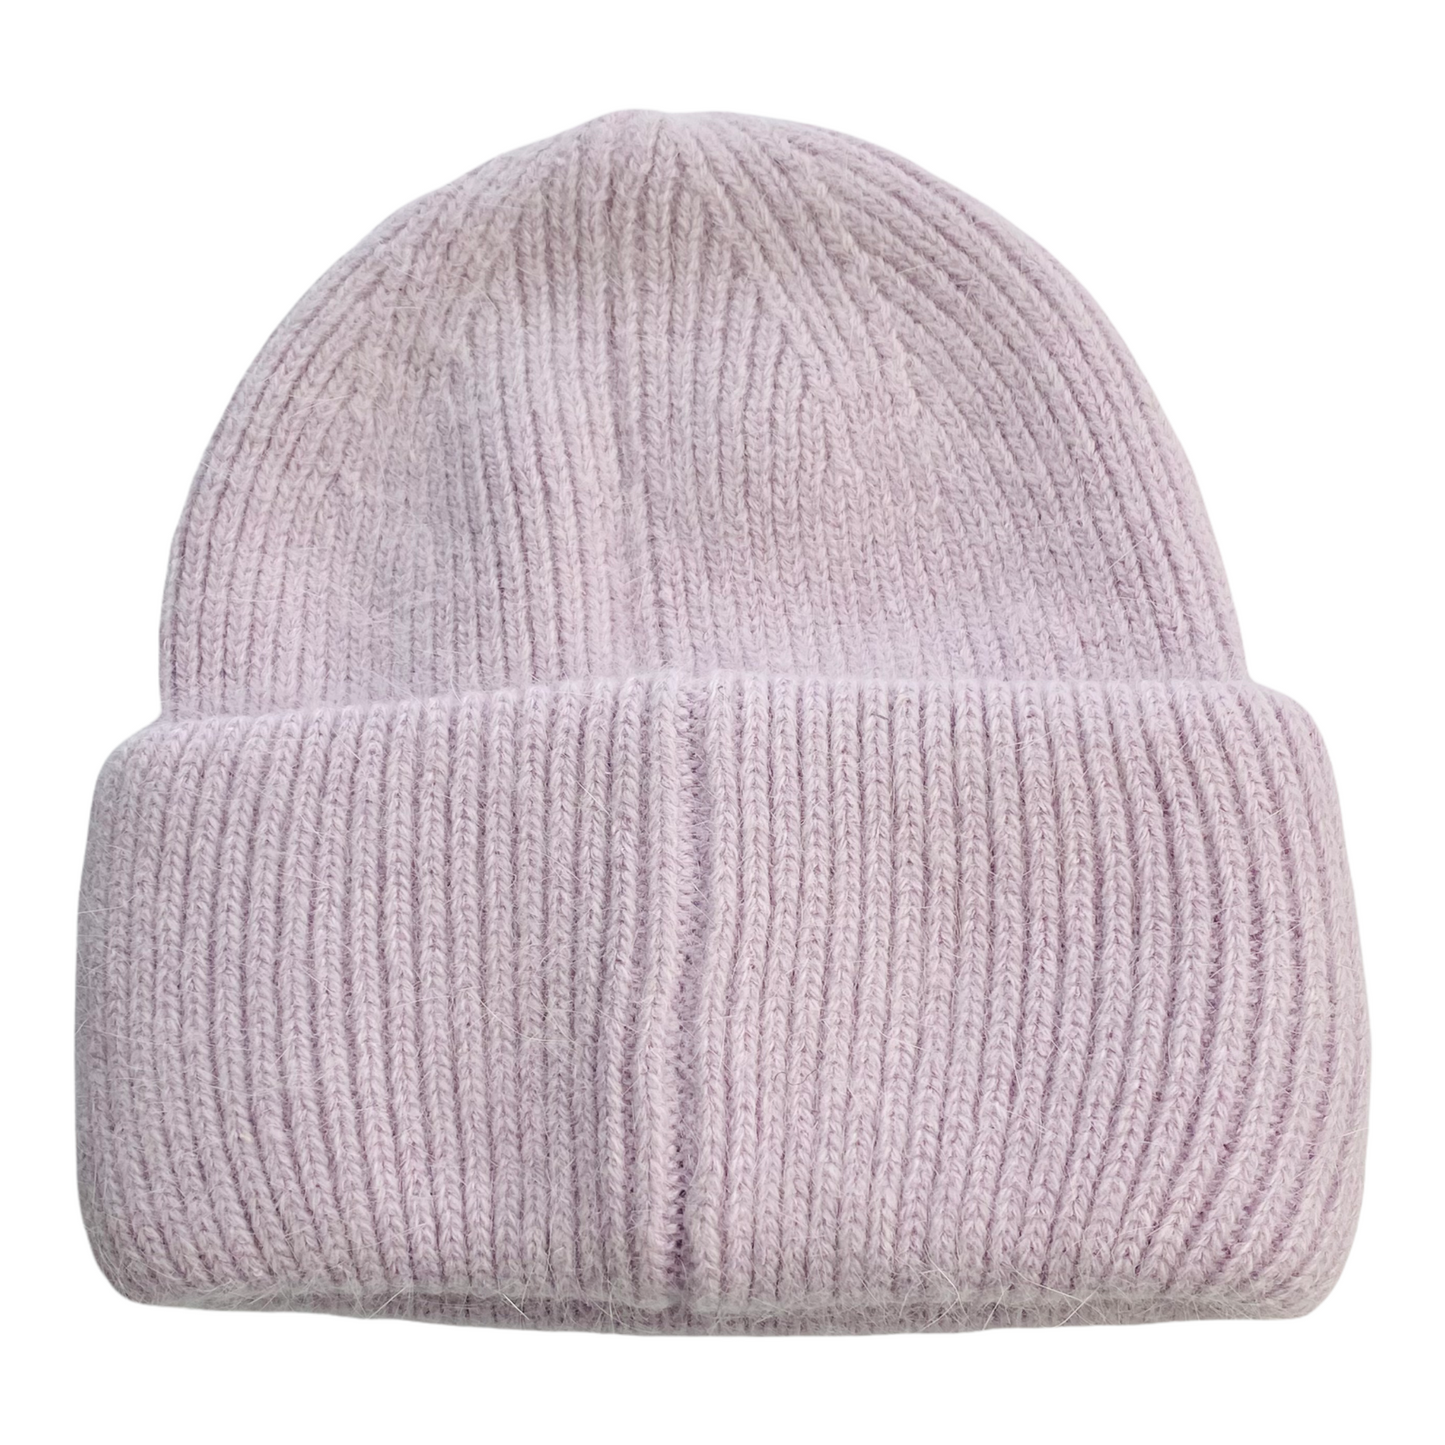 Women's Angora Wool Winter Hat Beanie - Lilac Purple